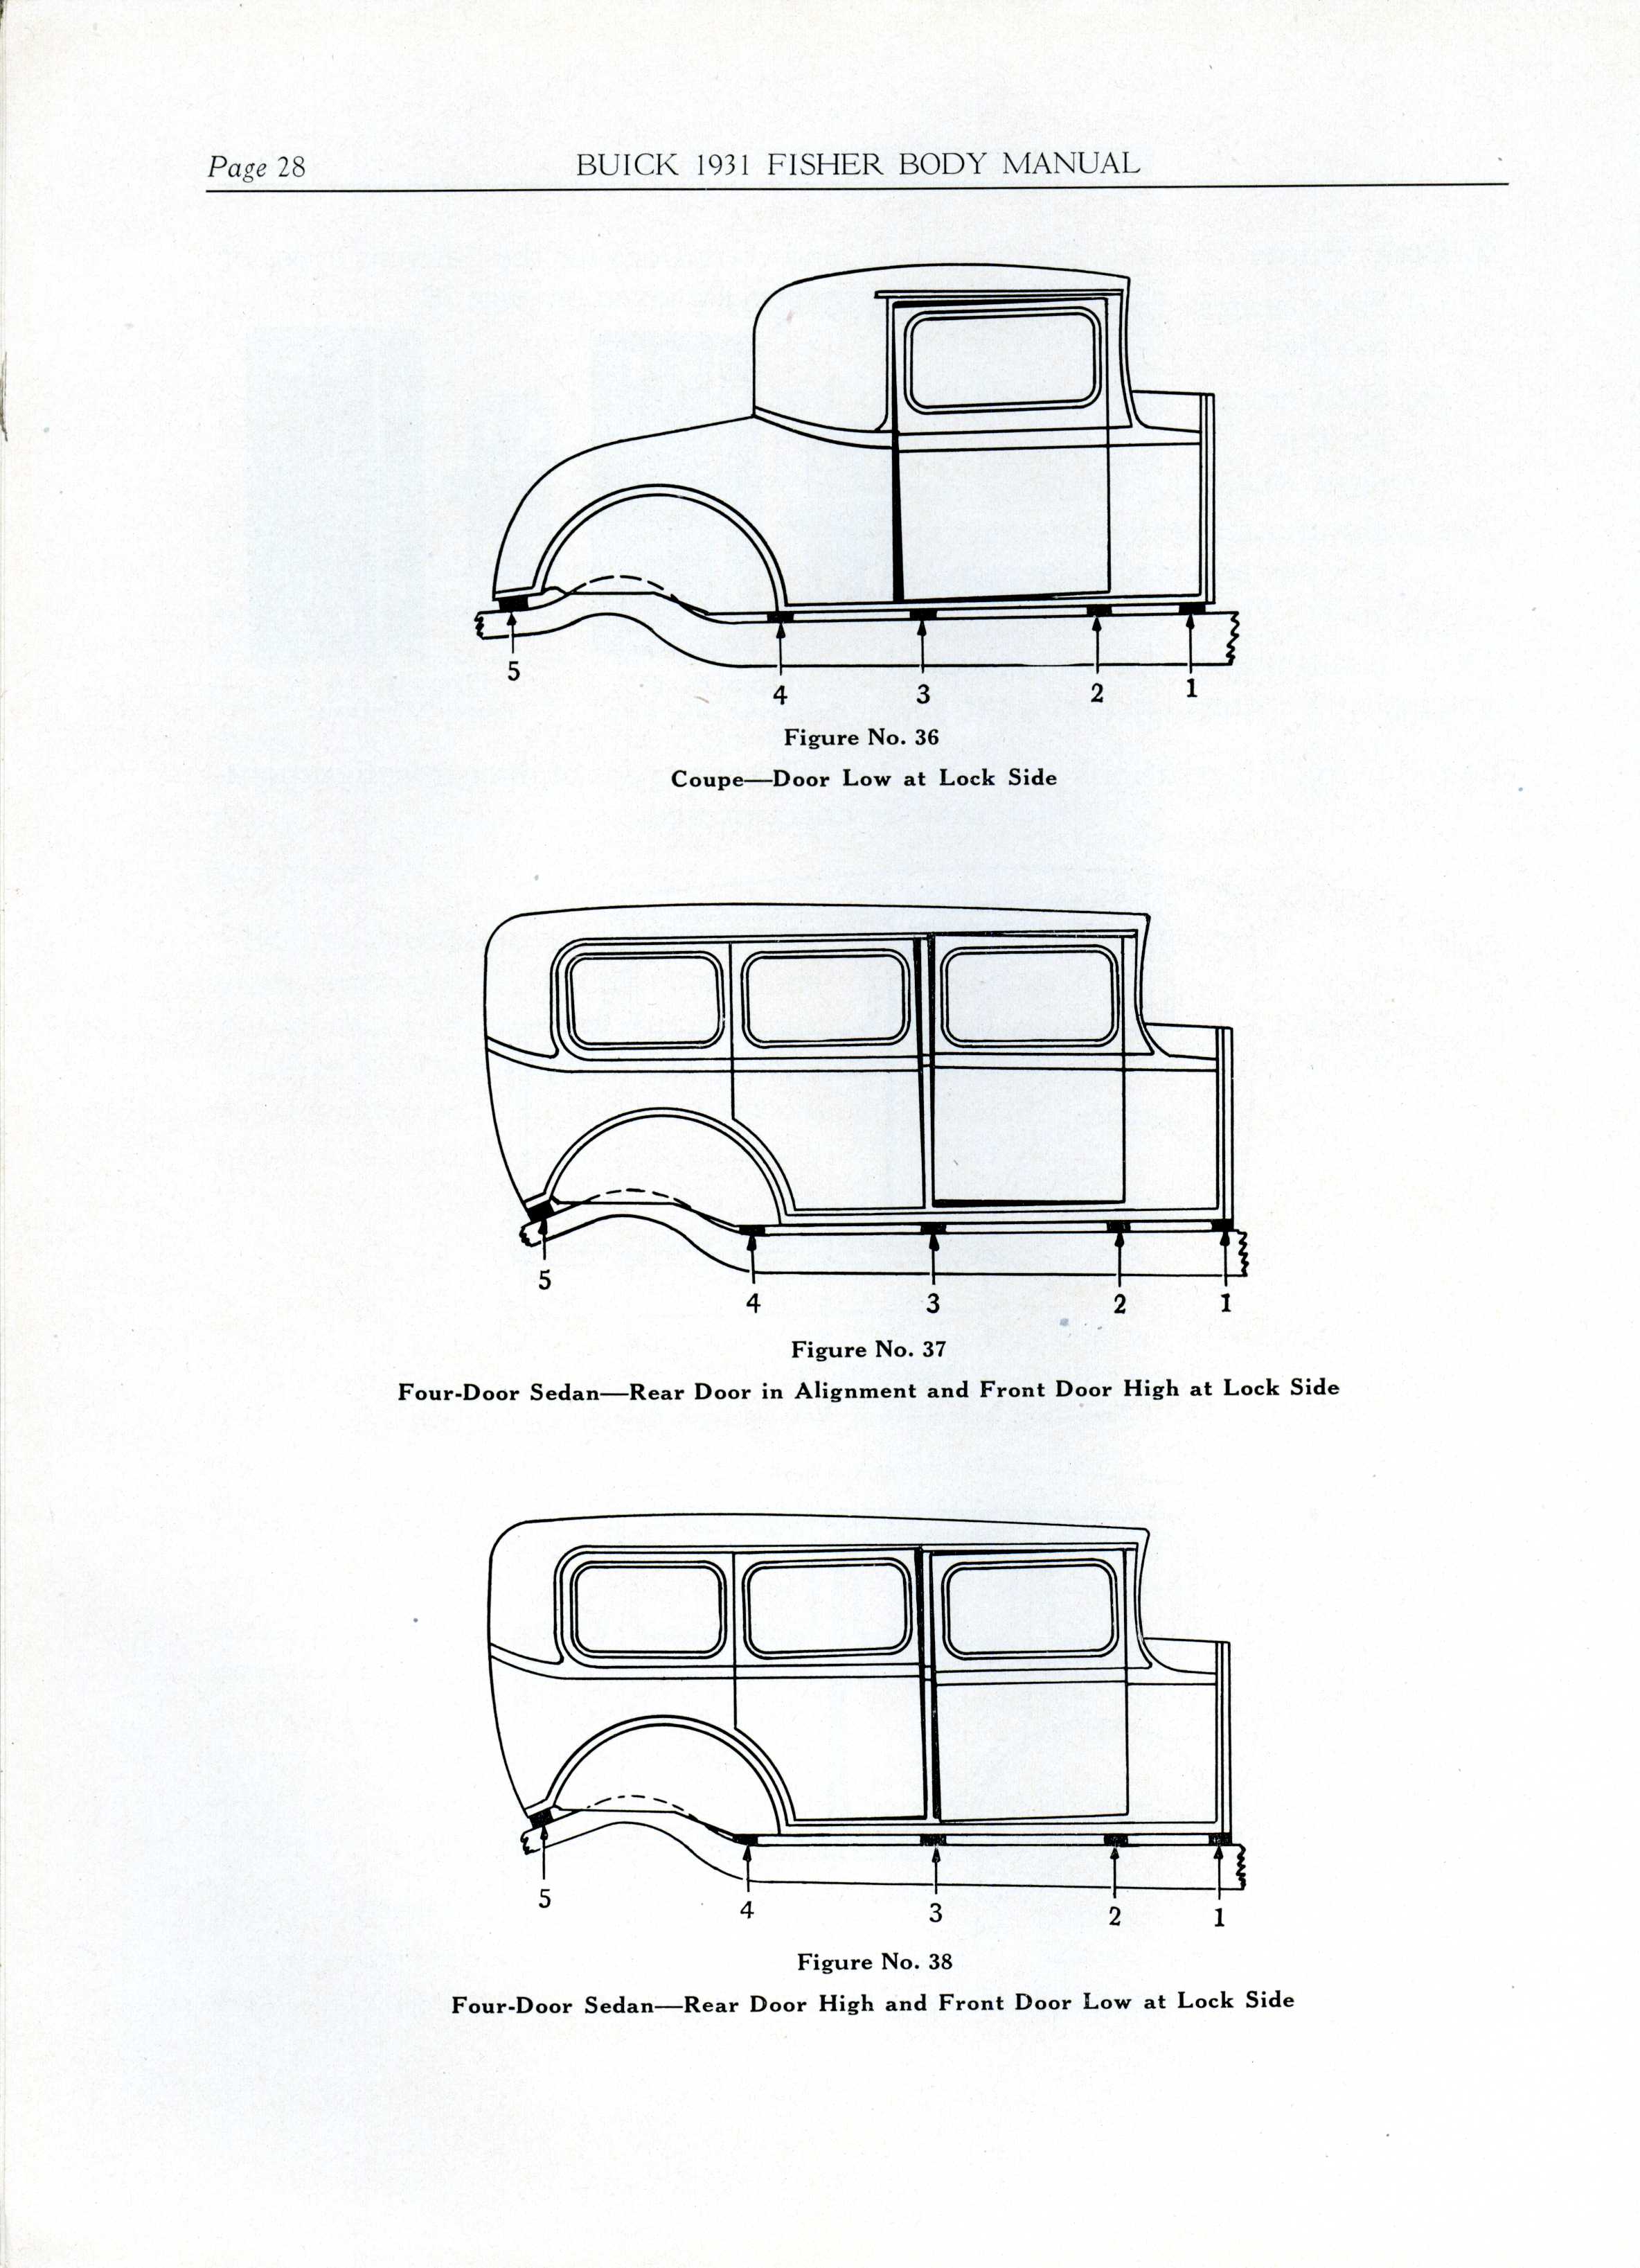 1931 Buick Fisher Body Manual-28